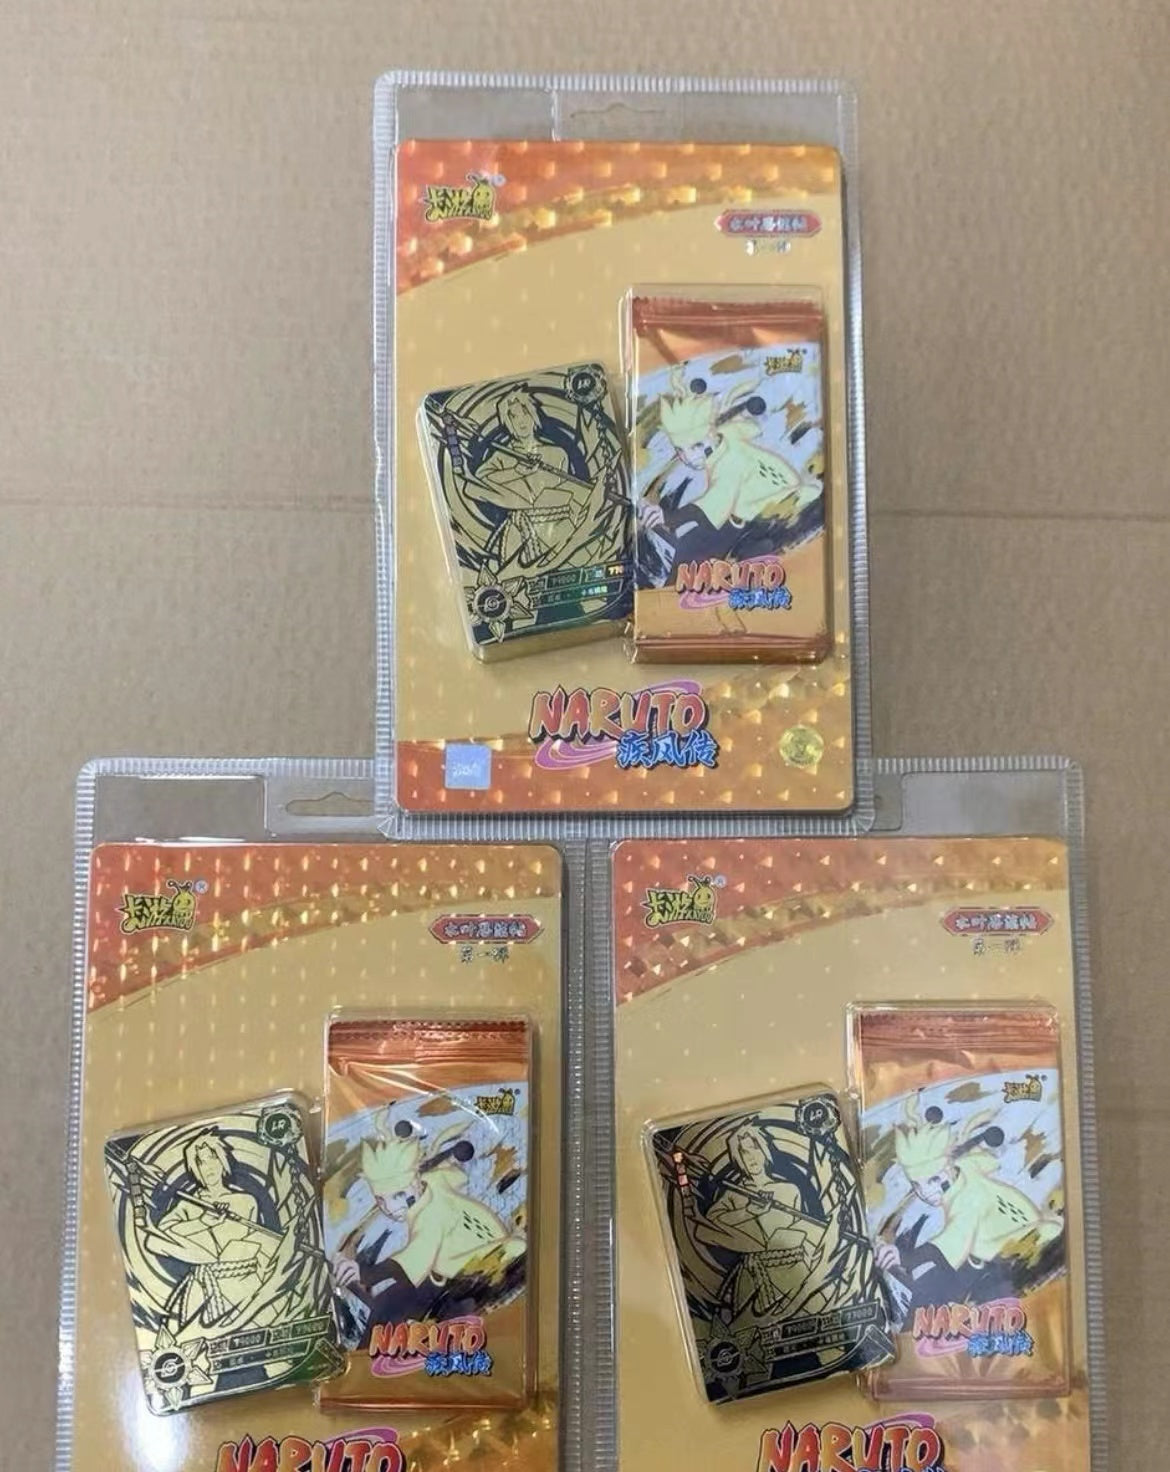 Blister cartes Naruto Shippuden - Pack démarrage Panini